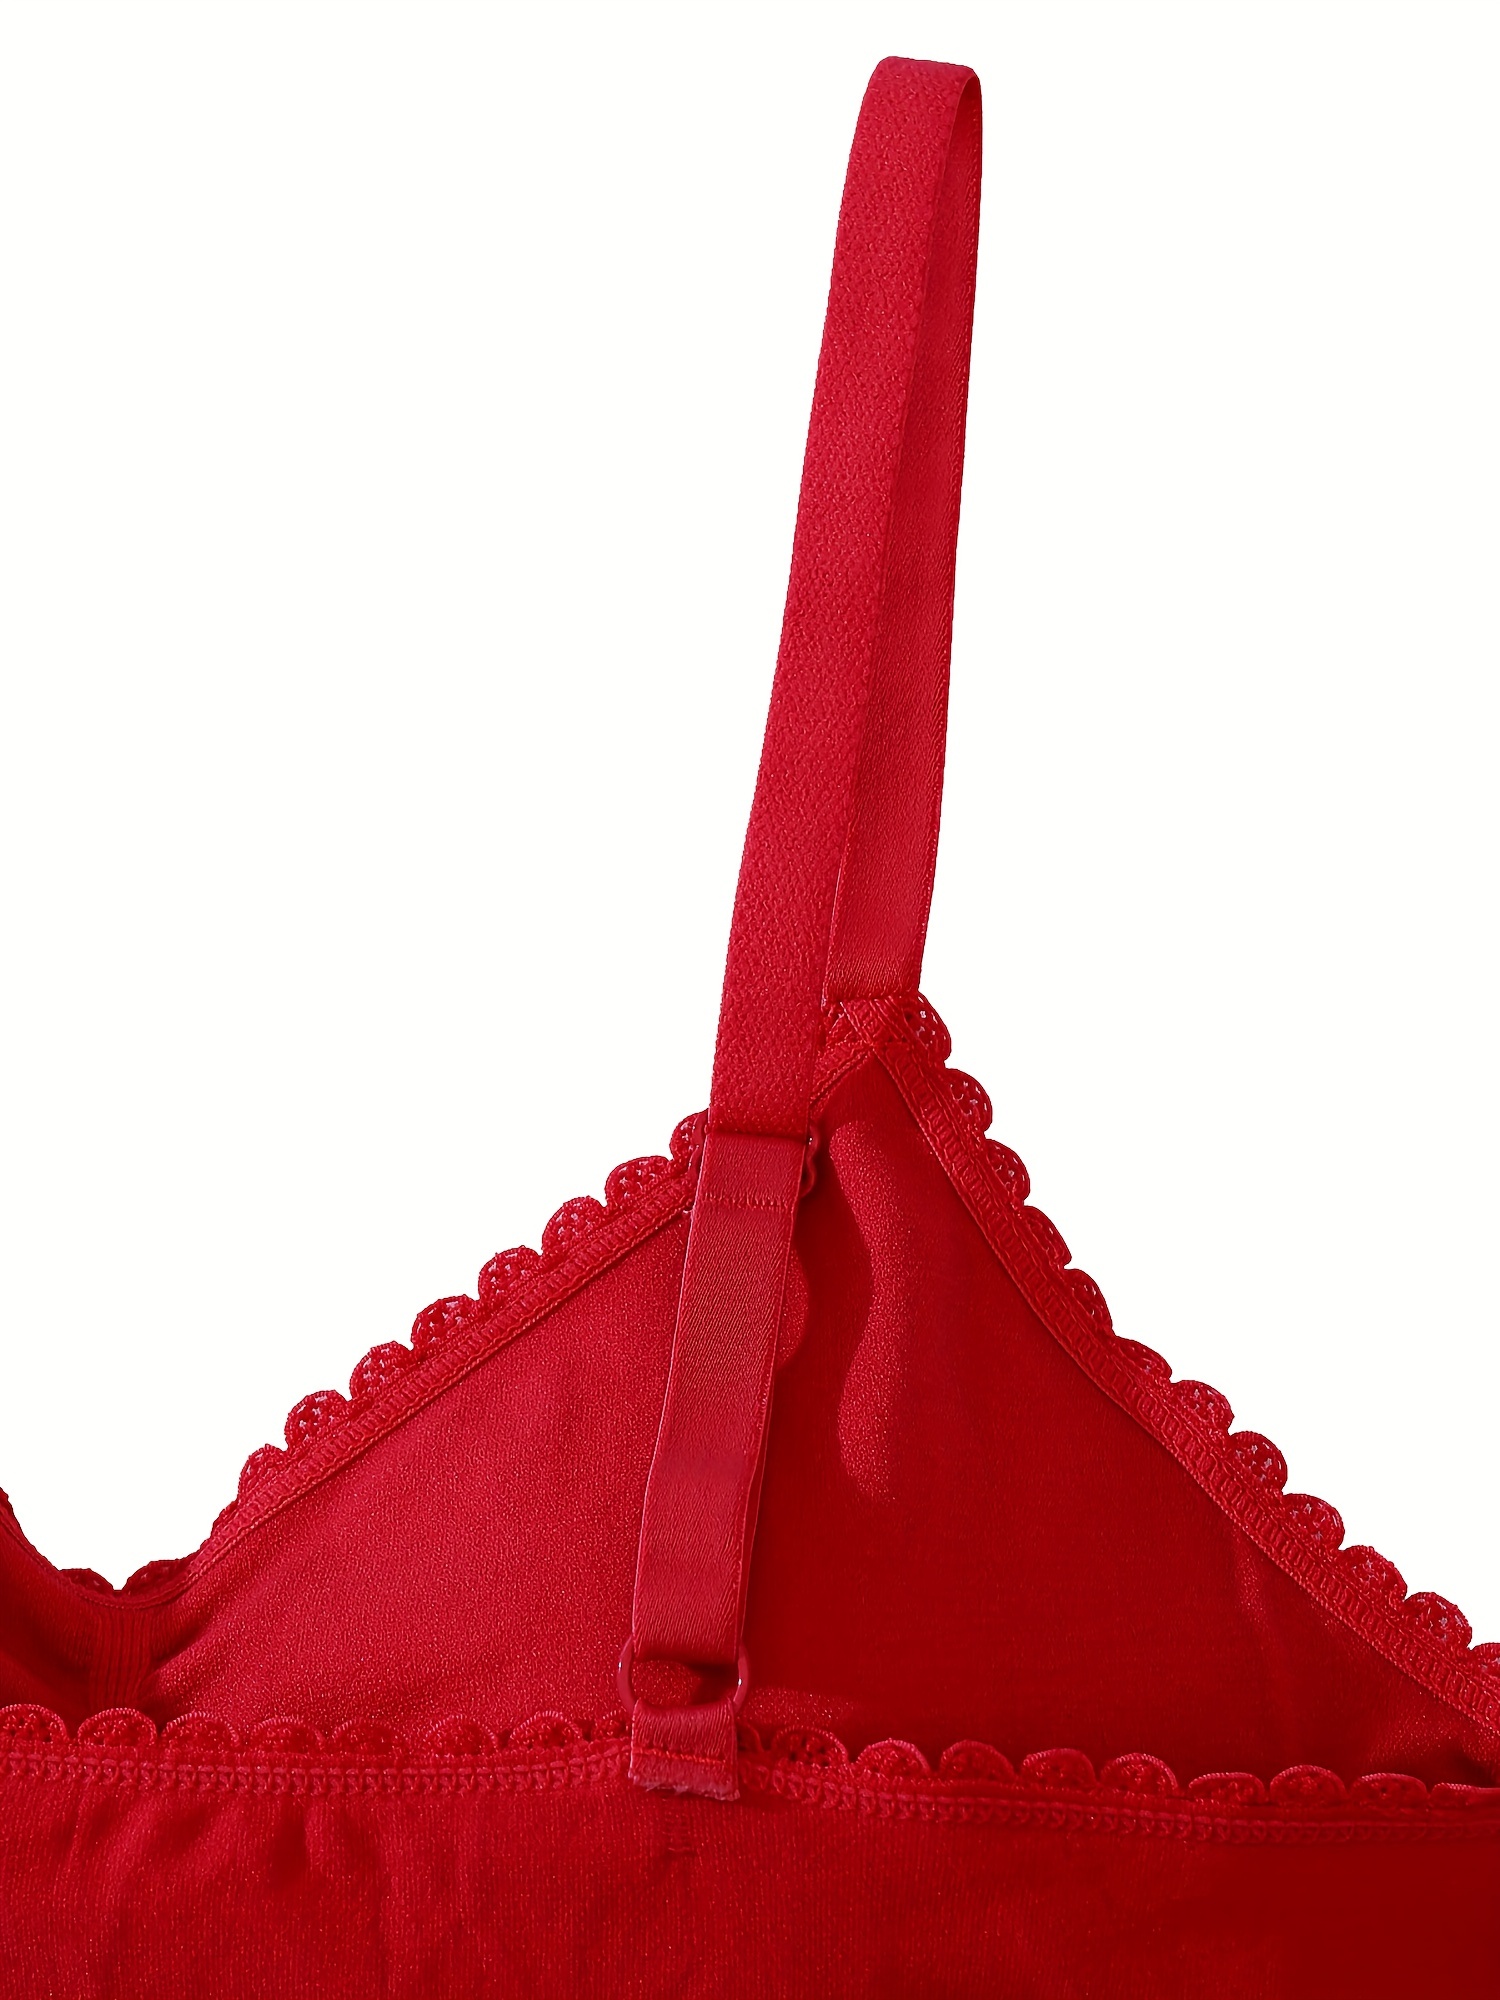 REORIAFEE Women's Bra Comfort Bra Plus Size Comfortable Lace Breathable Bra  Wireless Underwear Red M